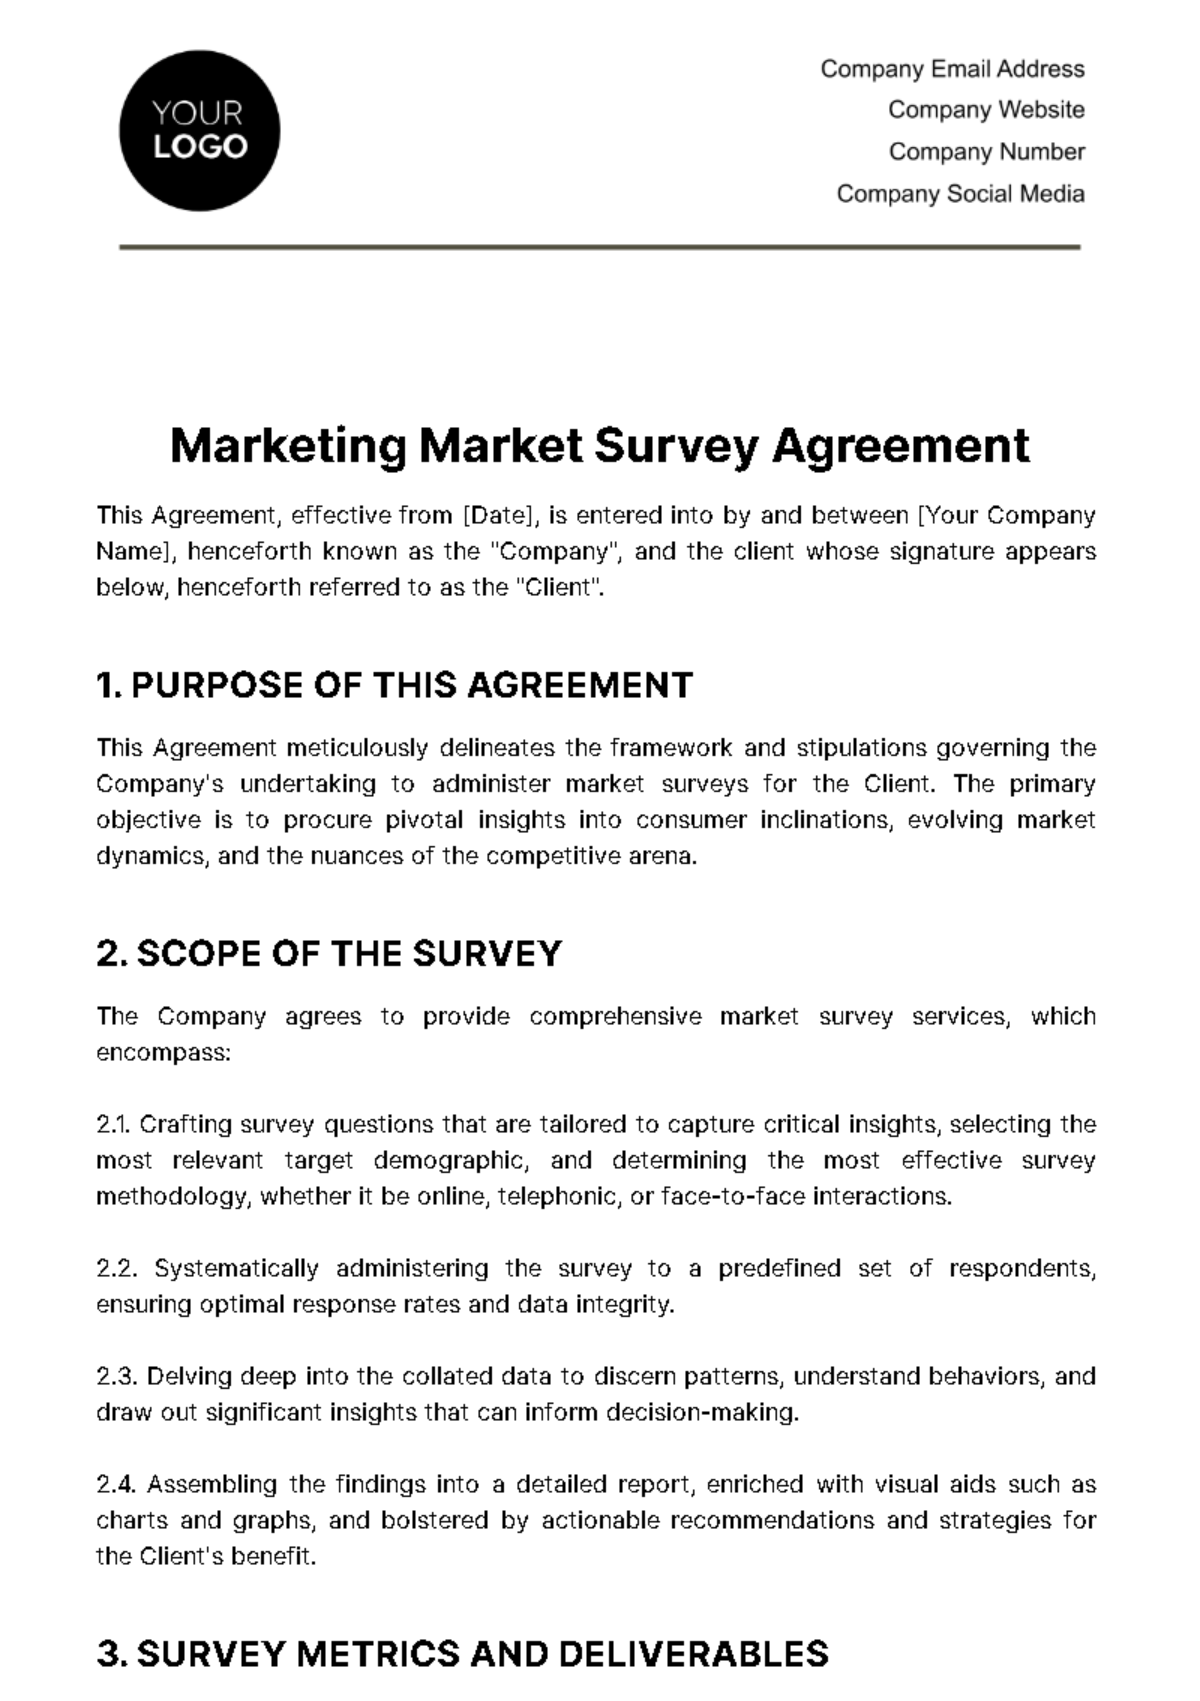 Free Marketing Market Survey Agreement Template